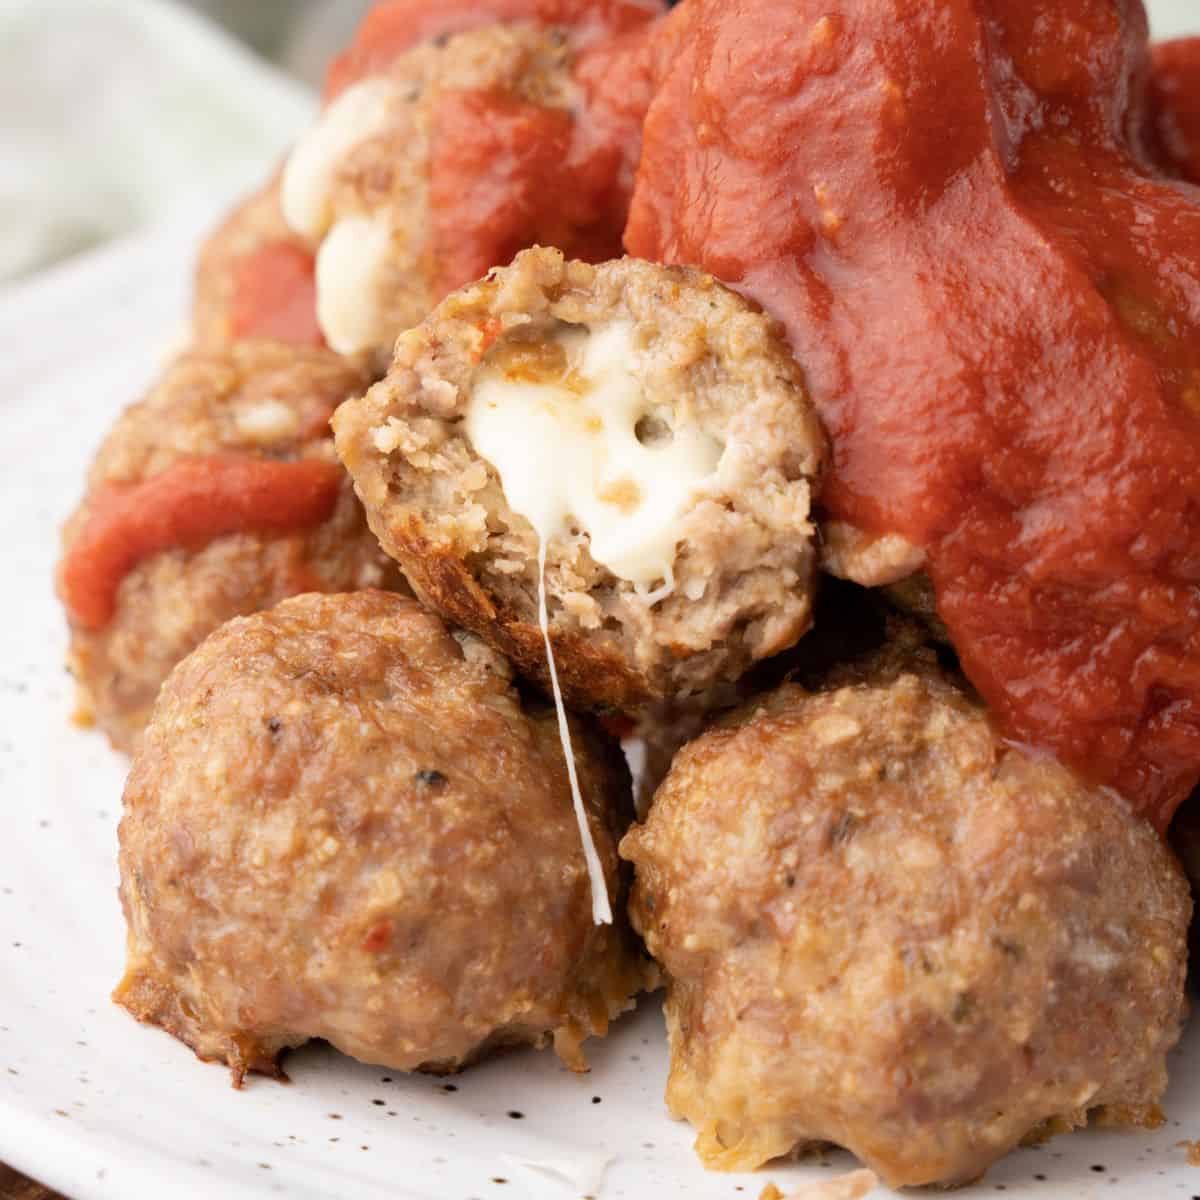 mozzarella stuffed meatballs on a plate.